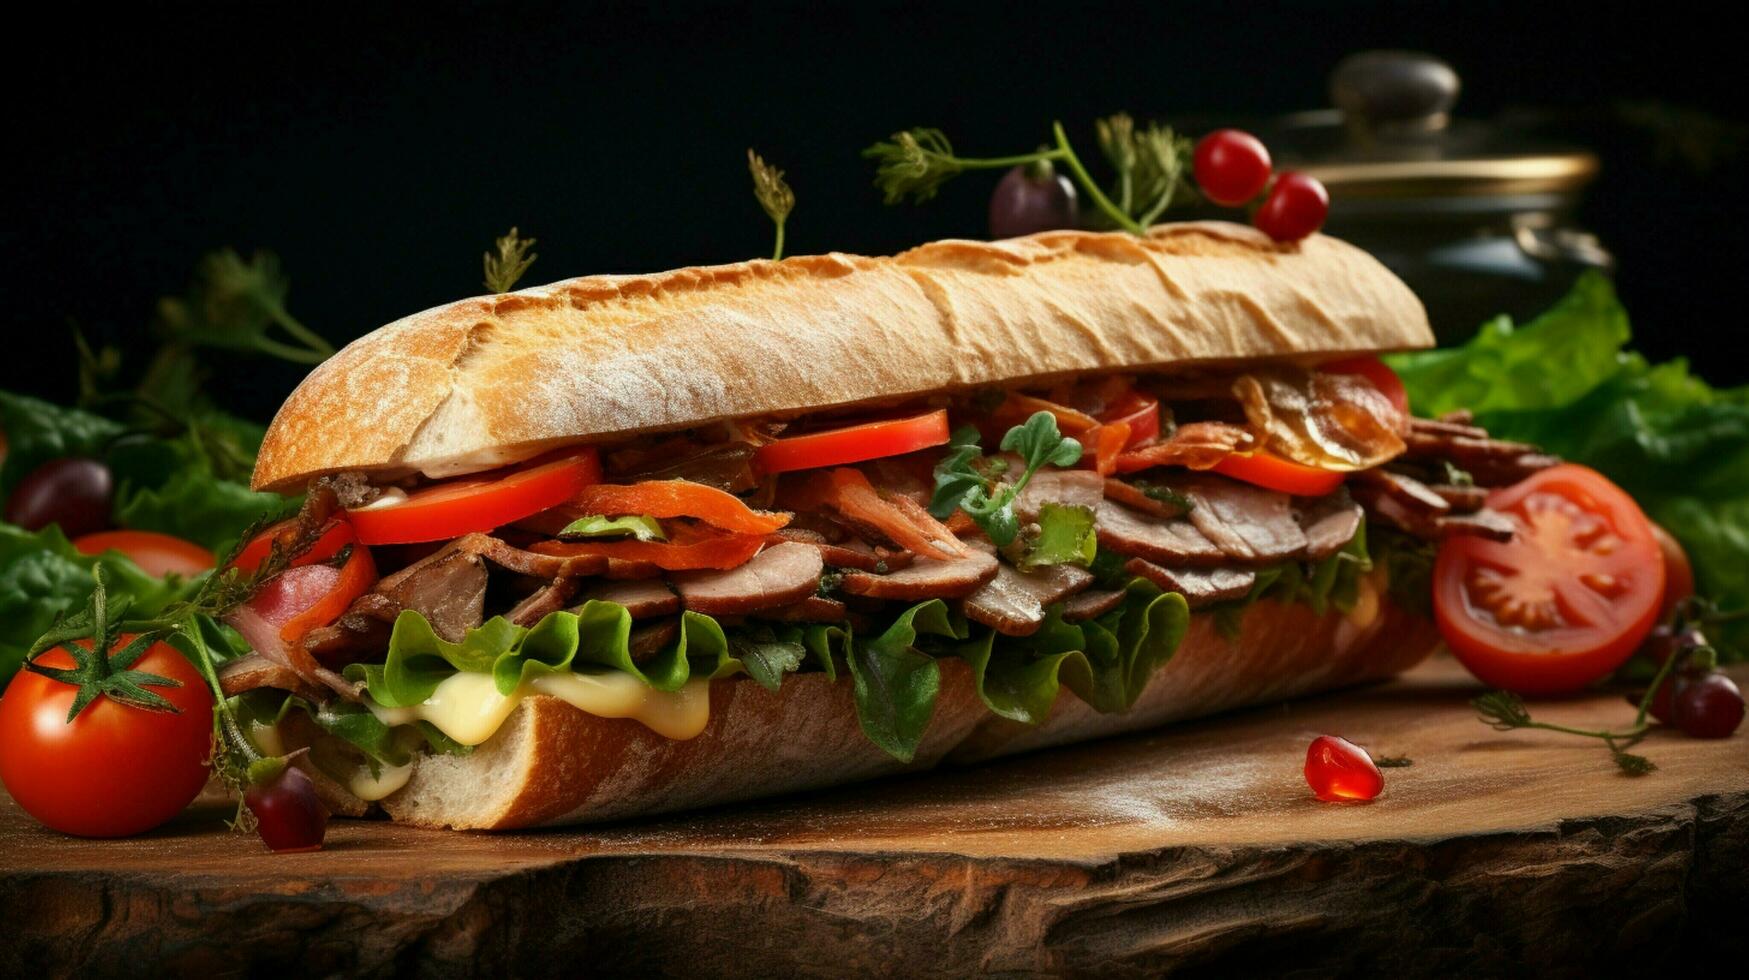 fresco gourmet sanduíche com carne e legumes foto